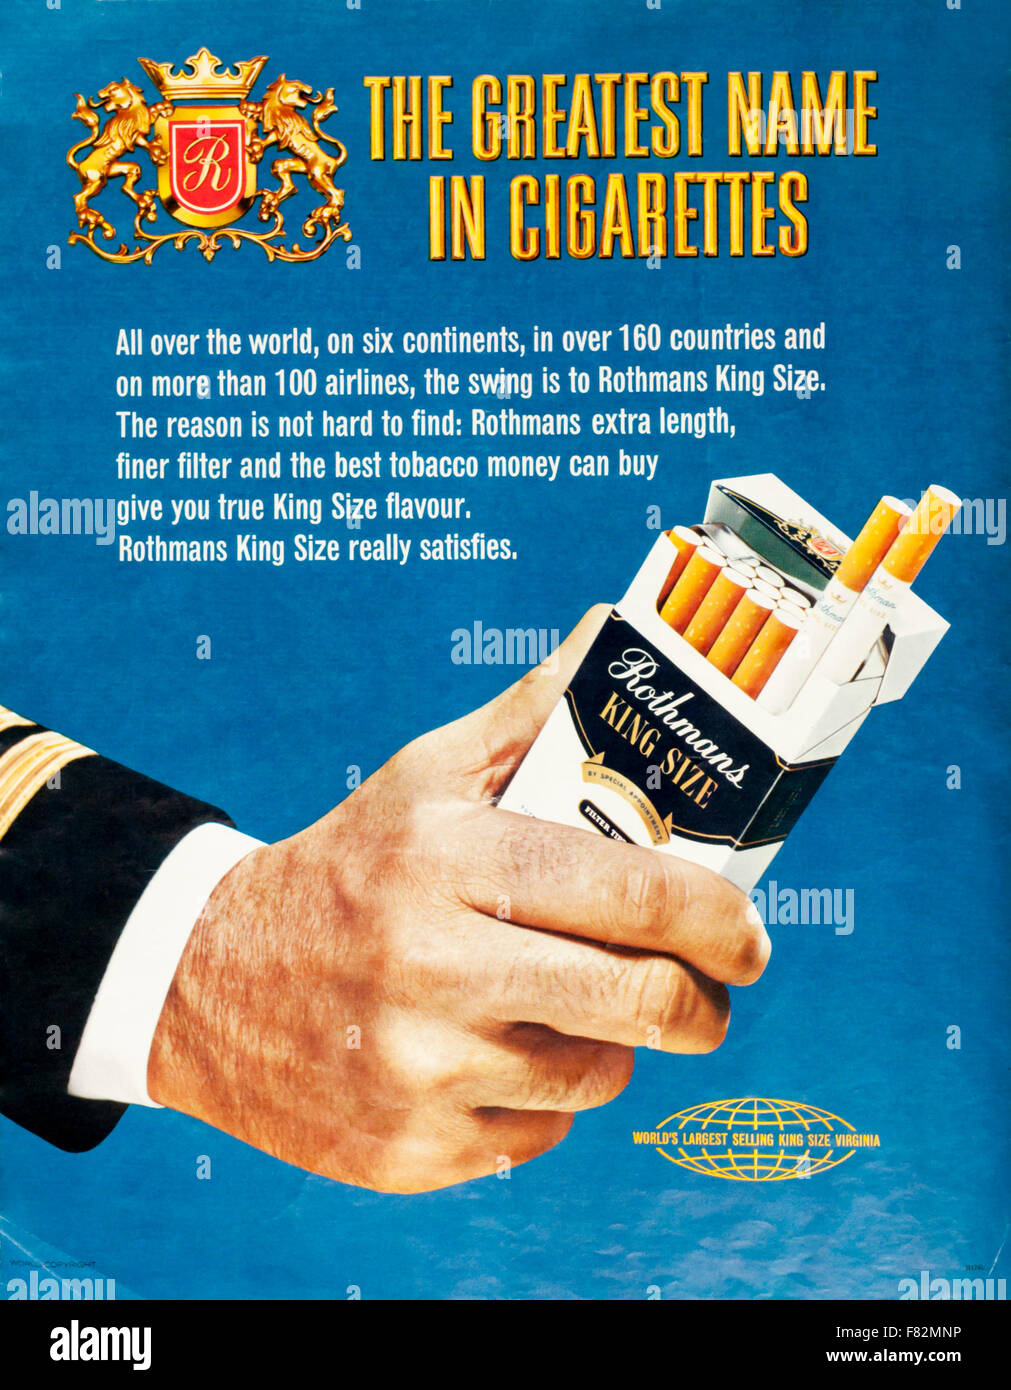 1970s magazine advertisement advertising Rothmans King Size cigarettes ...